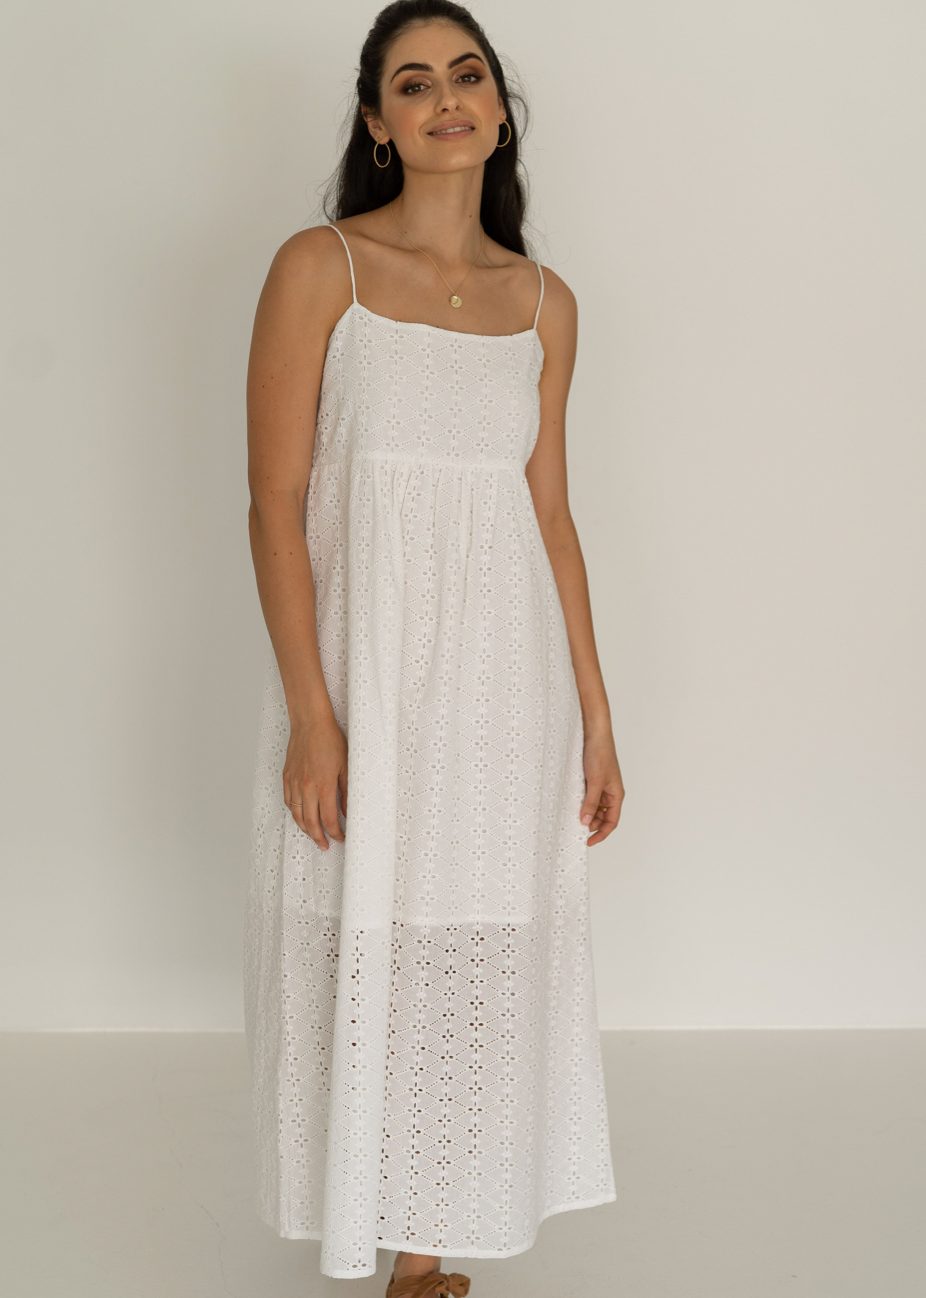 VENICE DRESS - White - Daisy Grace Lifestyle